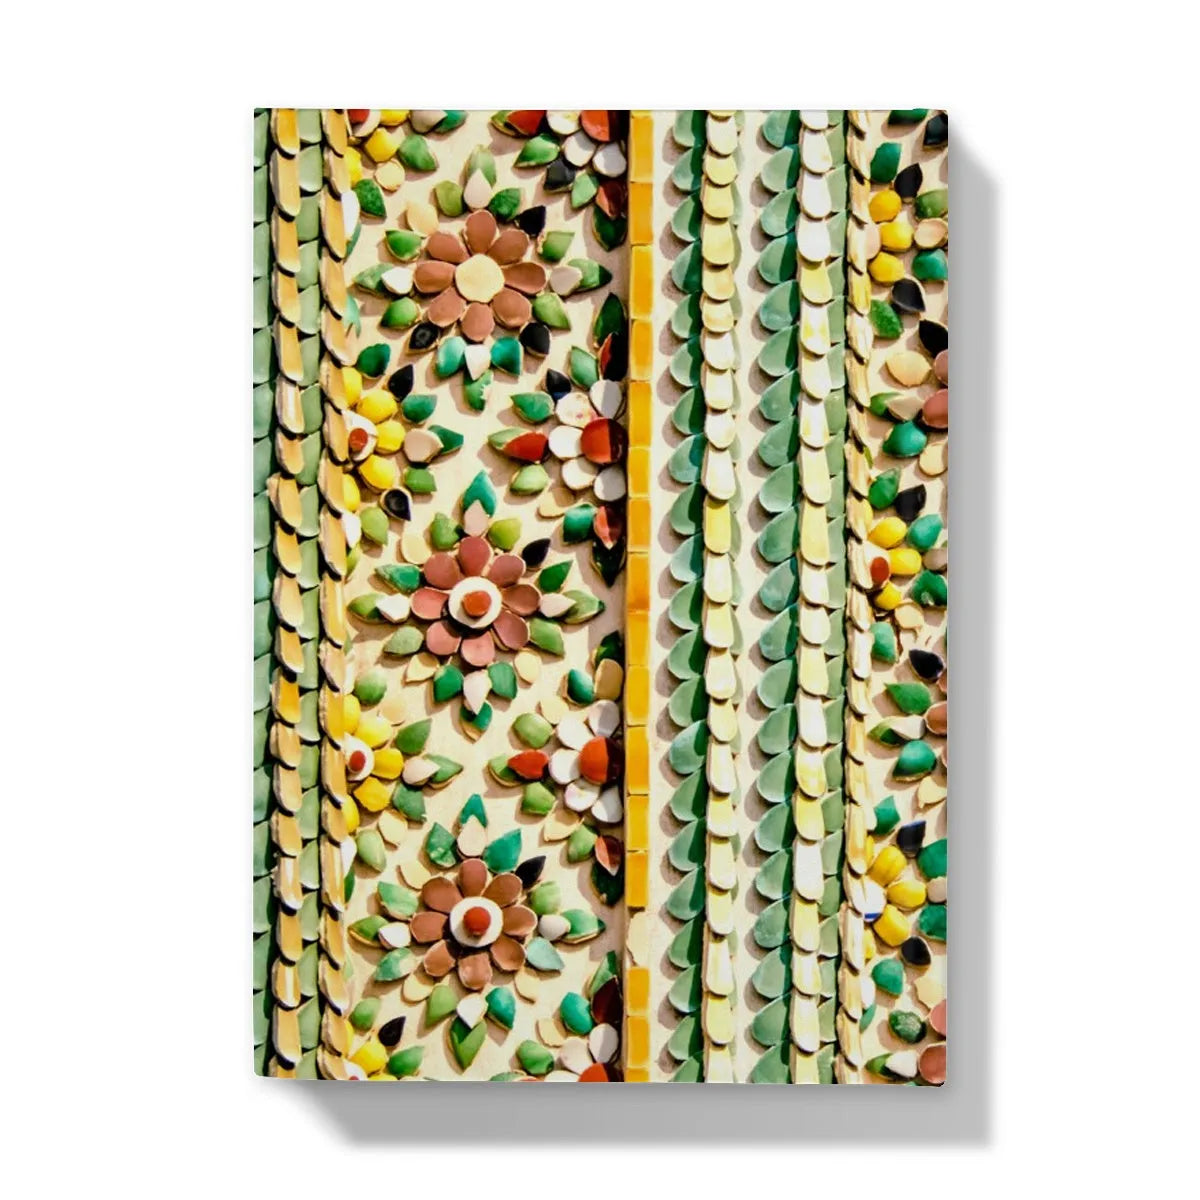 Flower Beds Hardback Journal - Notebooks & Notepads - Aesthetic Art